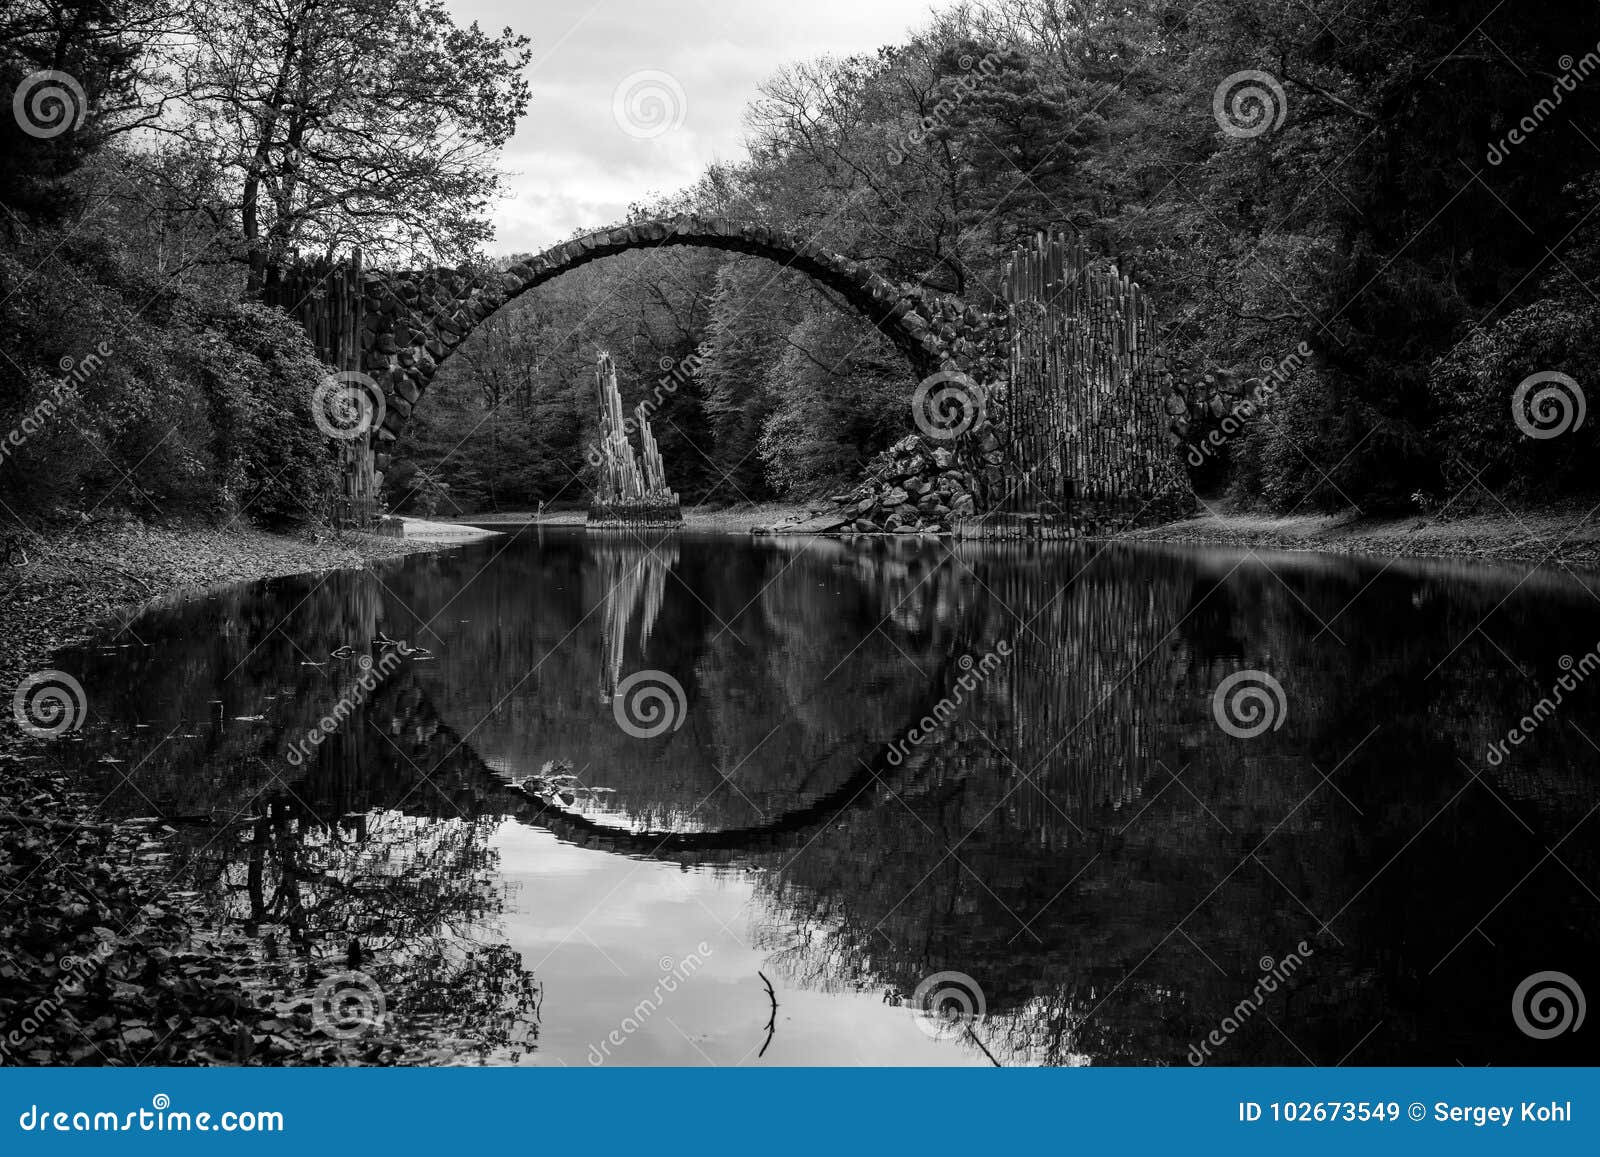 Details about   Photo Black and White Bridge,Rakotzbrucke,Kromlau Germany,Poster,Landscape 